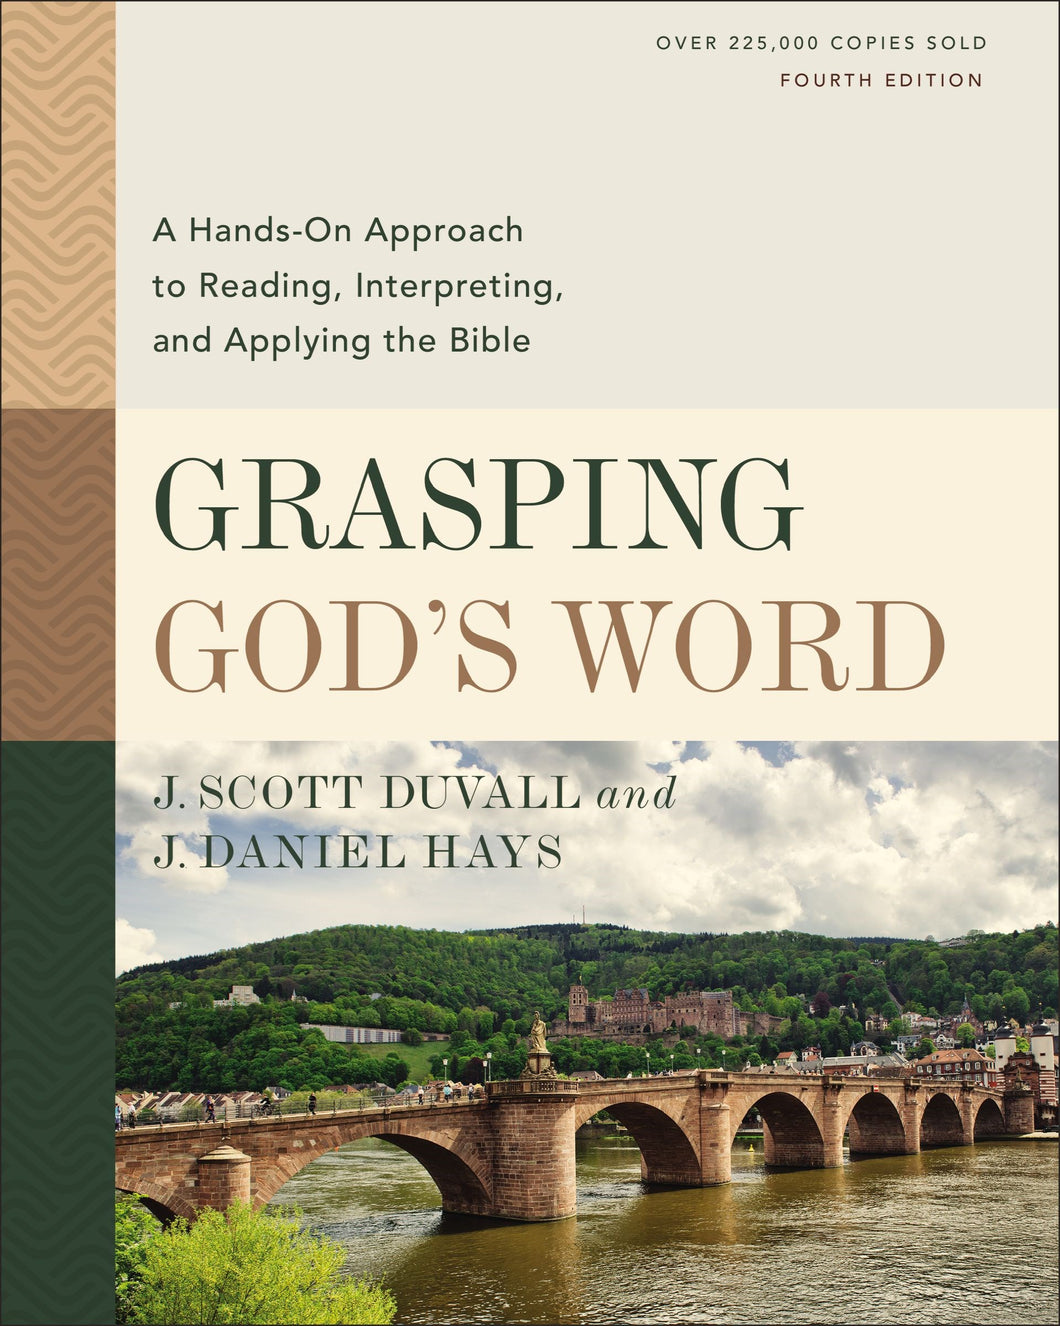 Grasping God's Word (Fourth Edition)